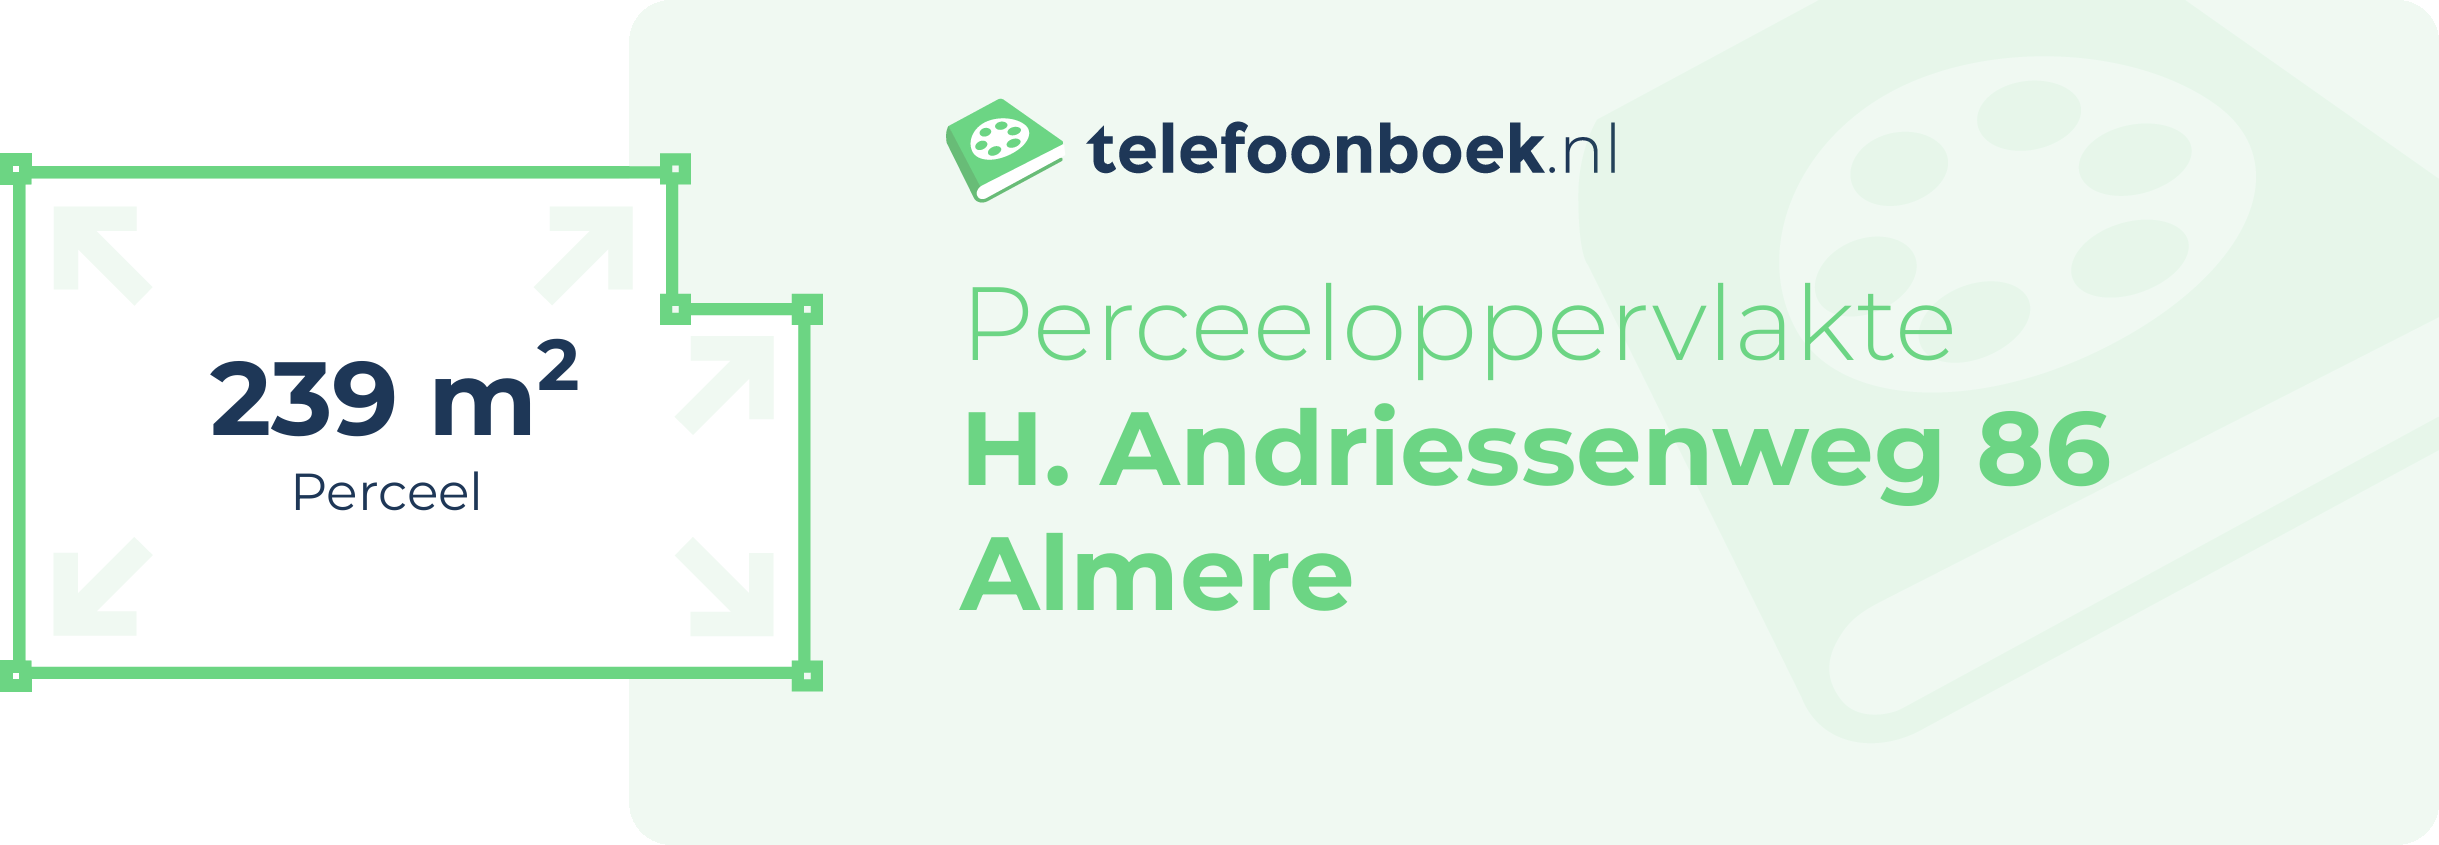 Perceeloppervlakte H. Andriessenweg 86 Almere